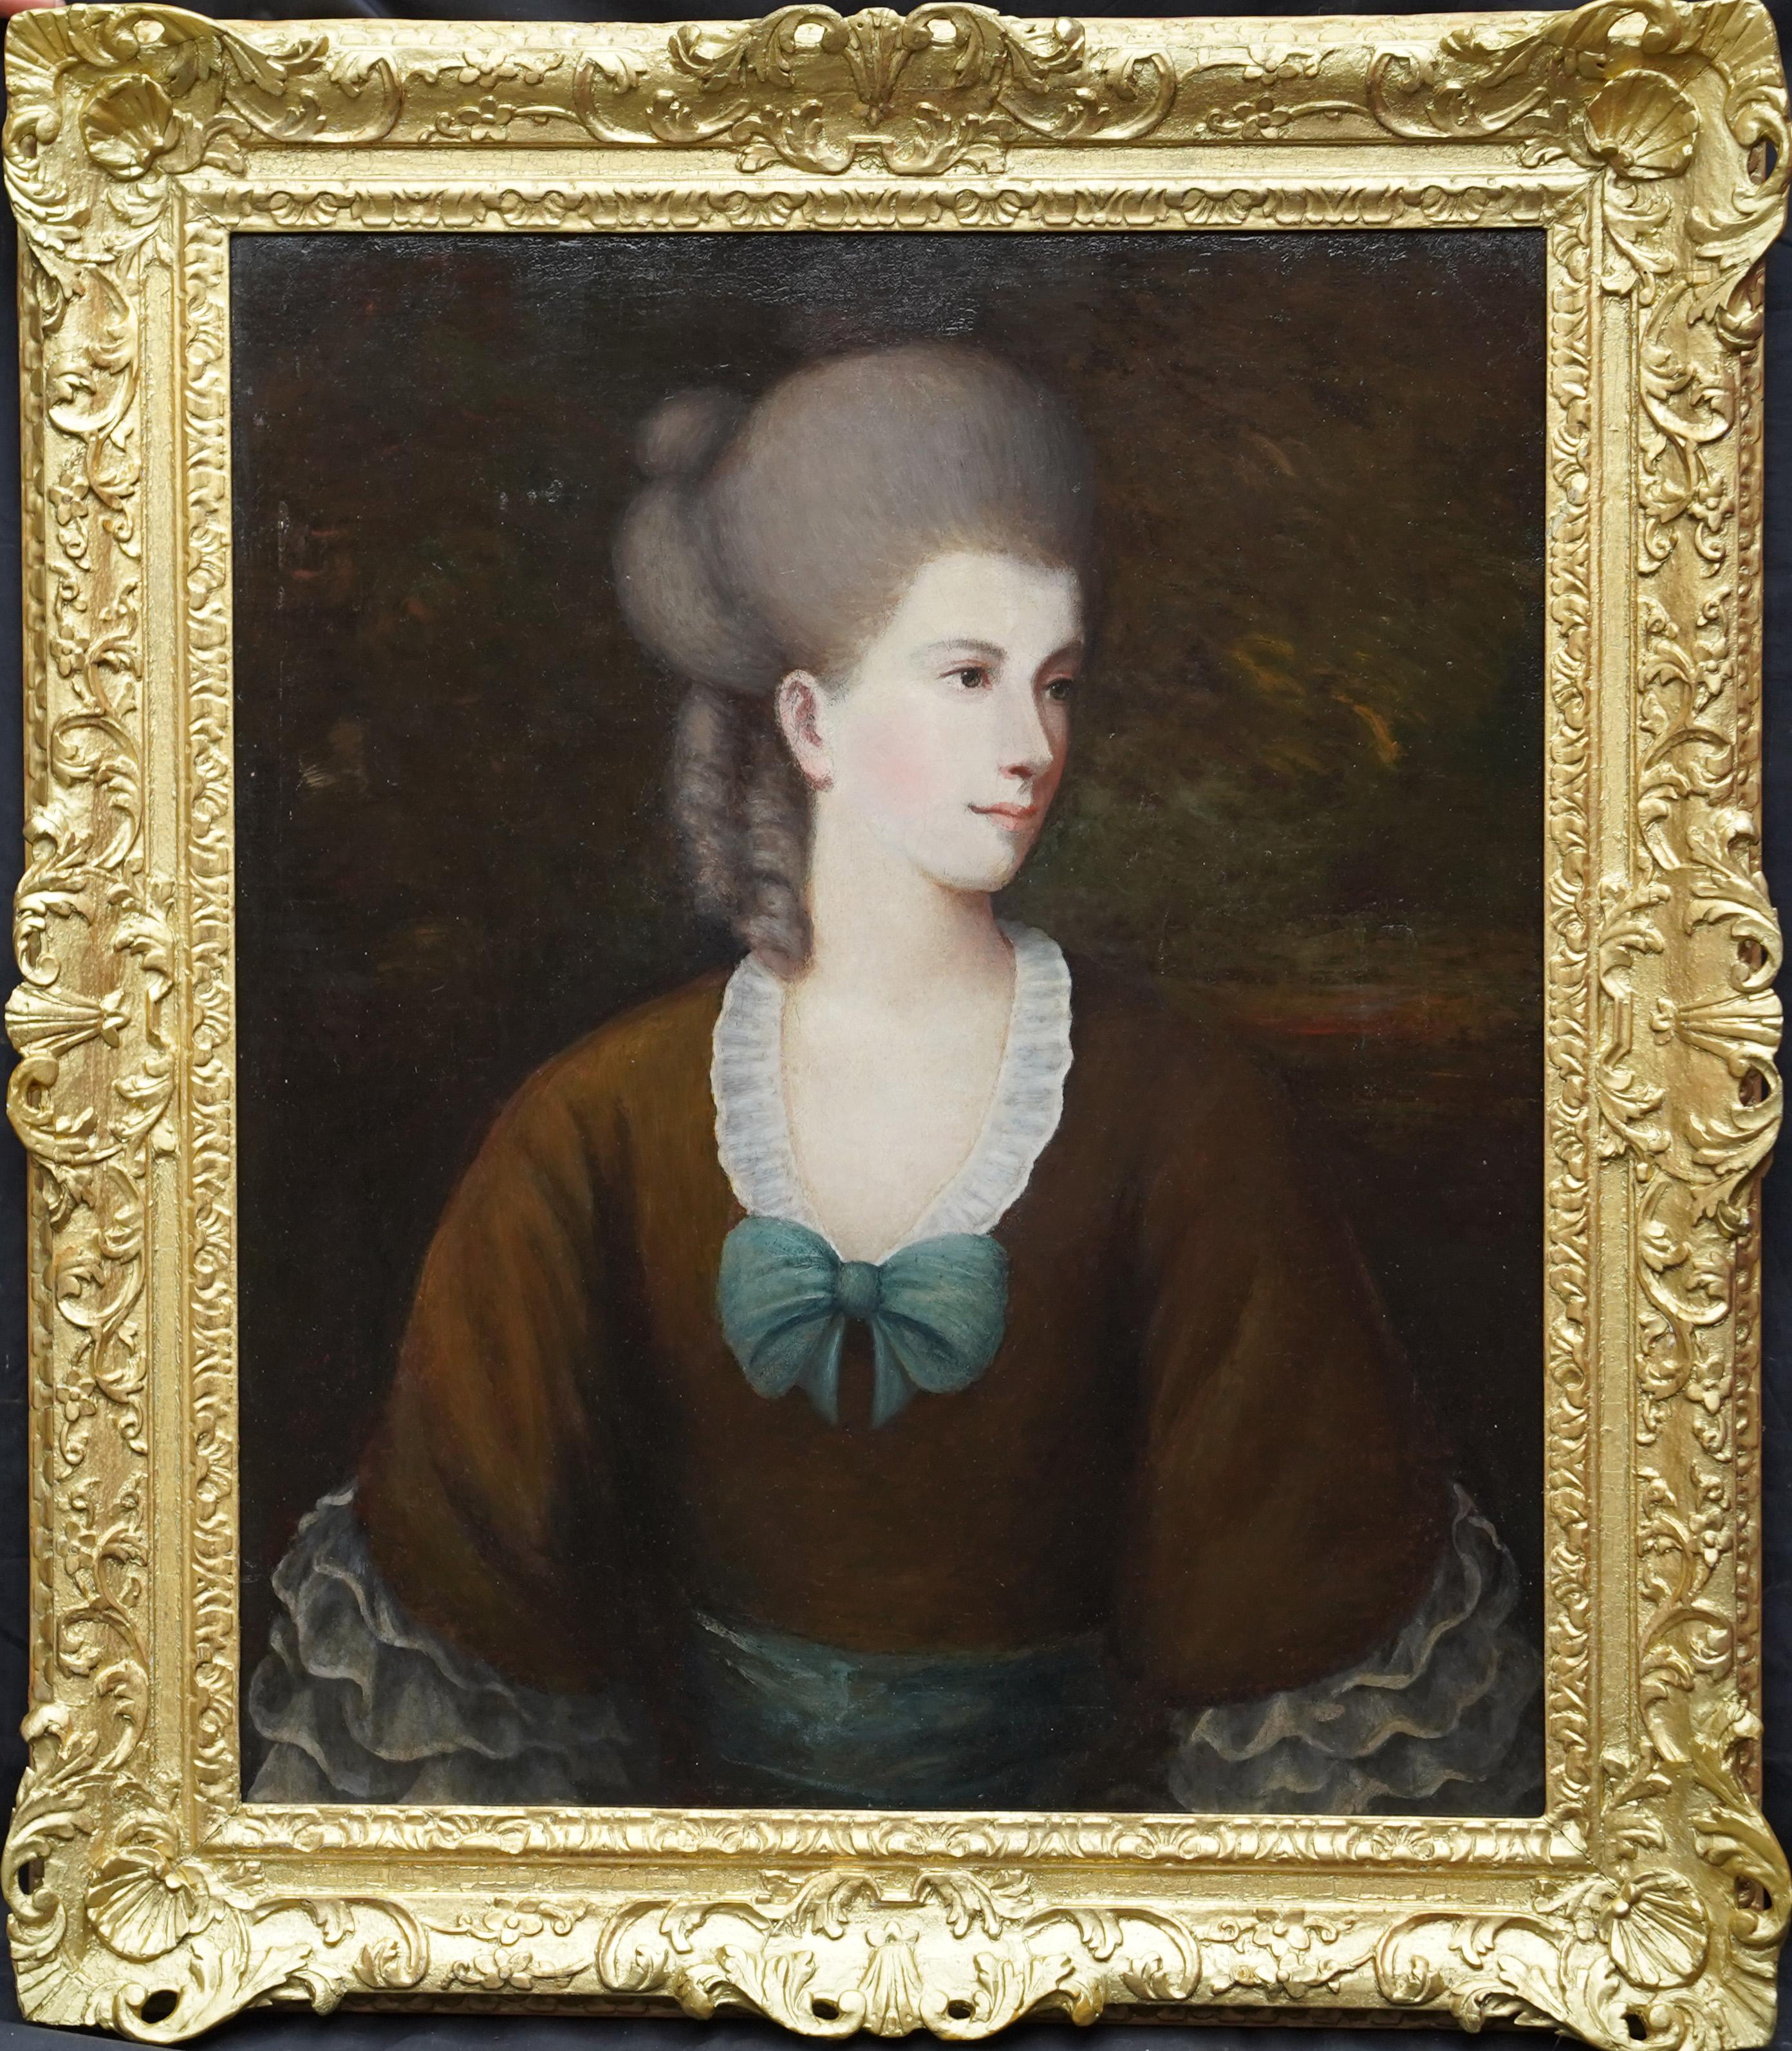 Portrait Painting de Matthew William Peters - Retrato de una dama con un lazo azul - Arte británico del siglo XVIII Pintura al óleo del Viejo Maestro